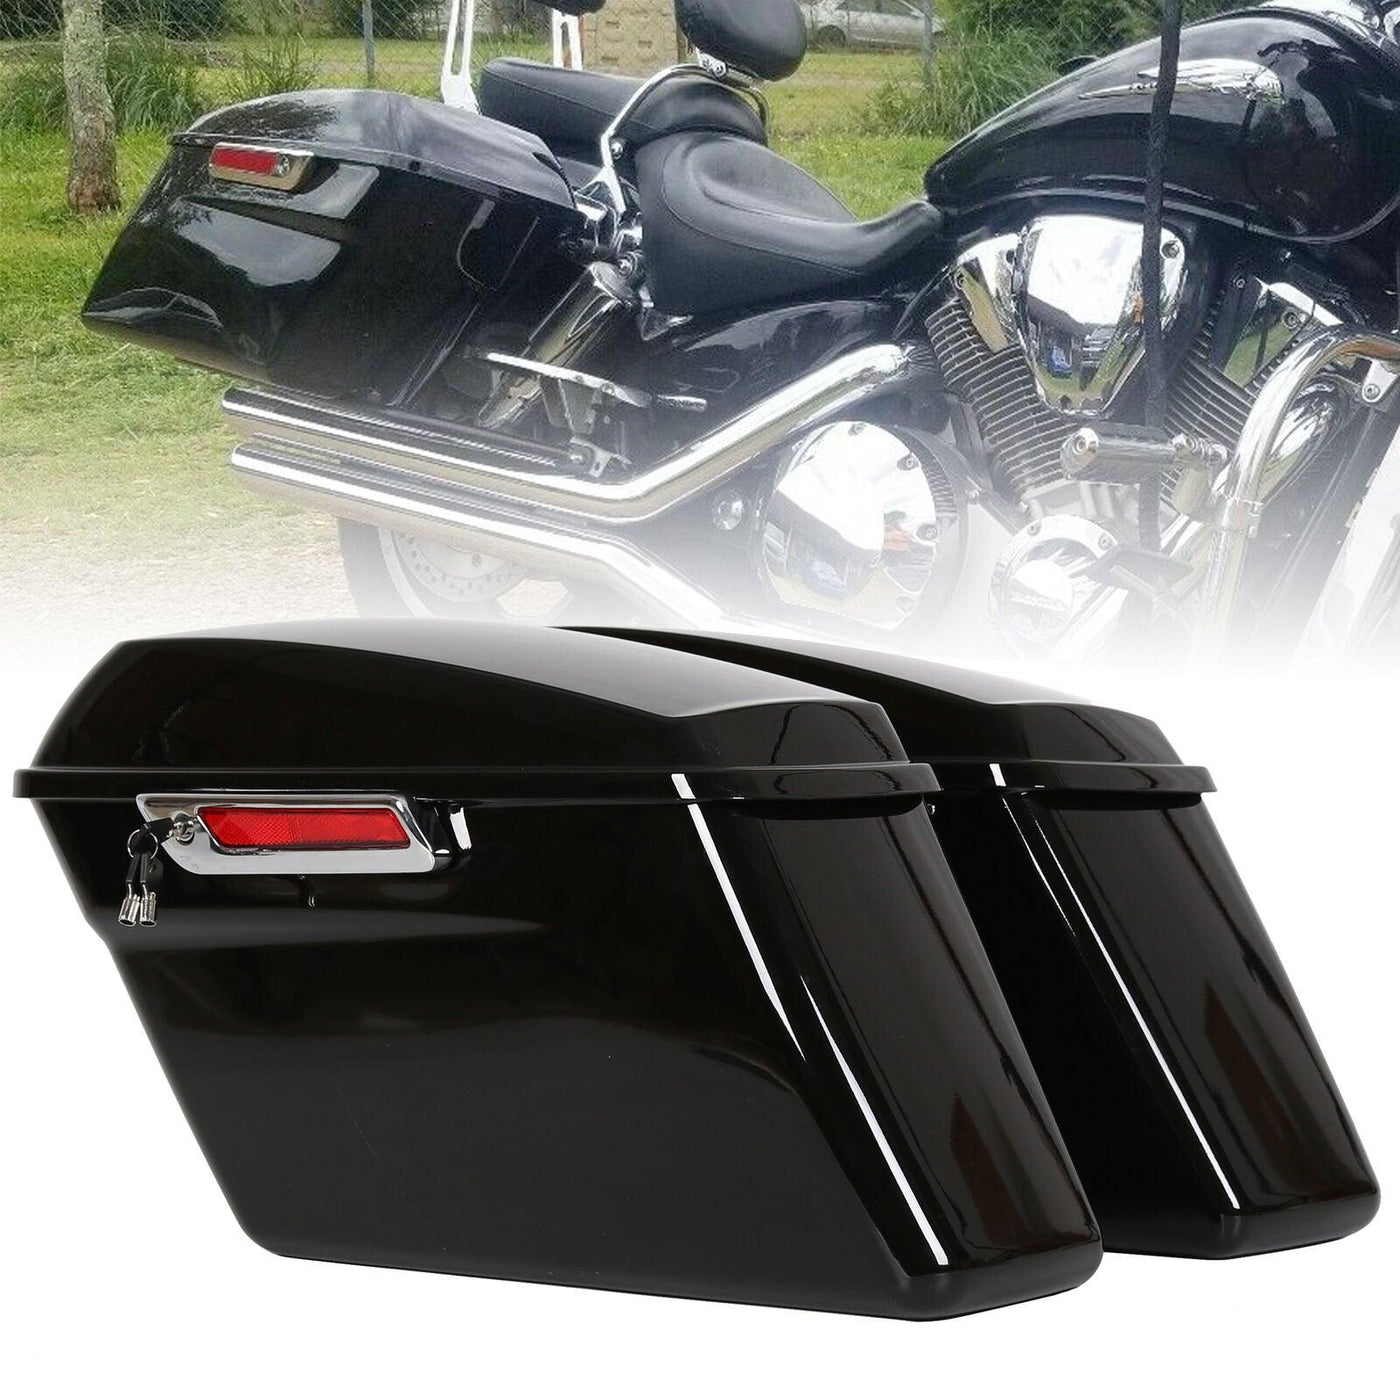 Painted Black Hard Saddle Bags w/ keys For 2014-2021 Harley Davidson Touring - Moto Life Products